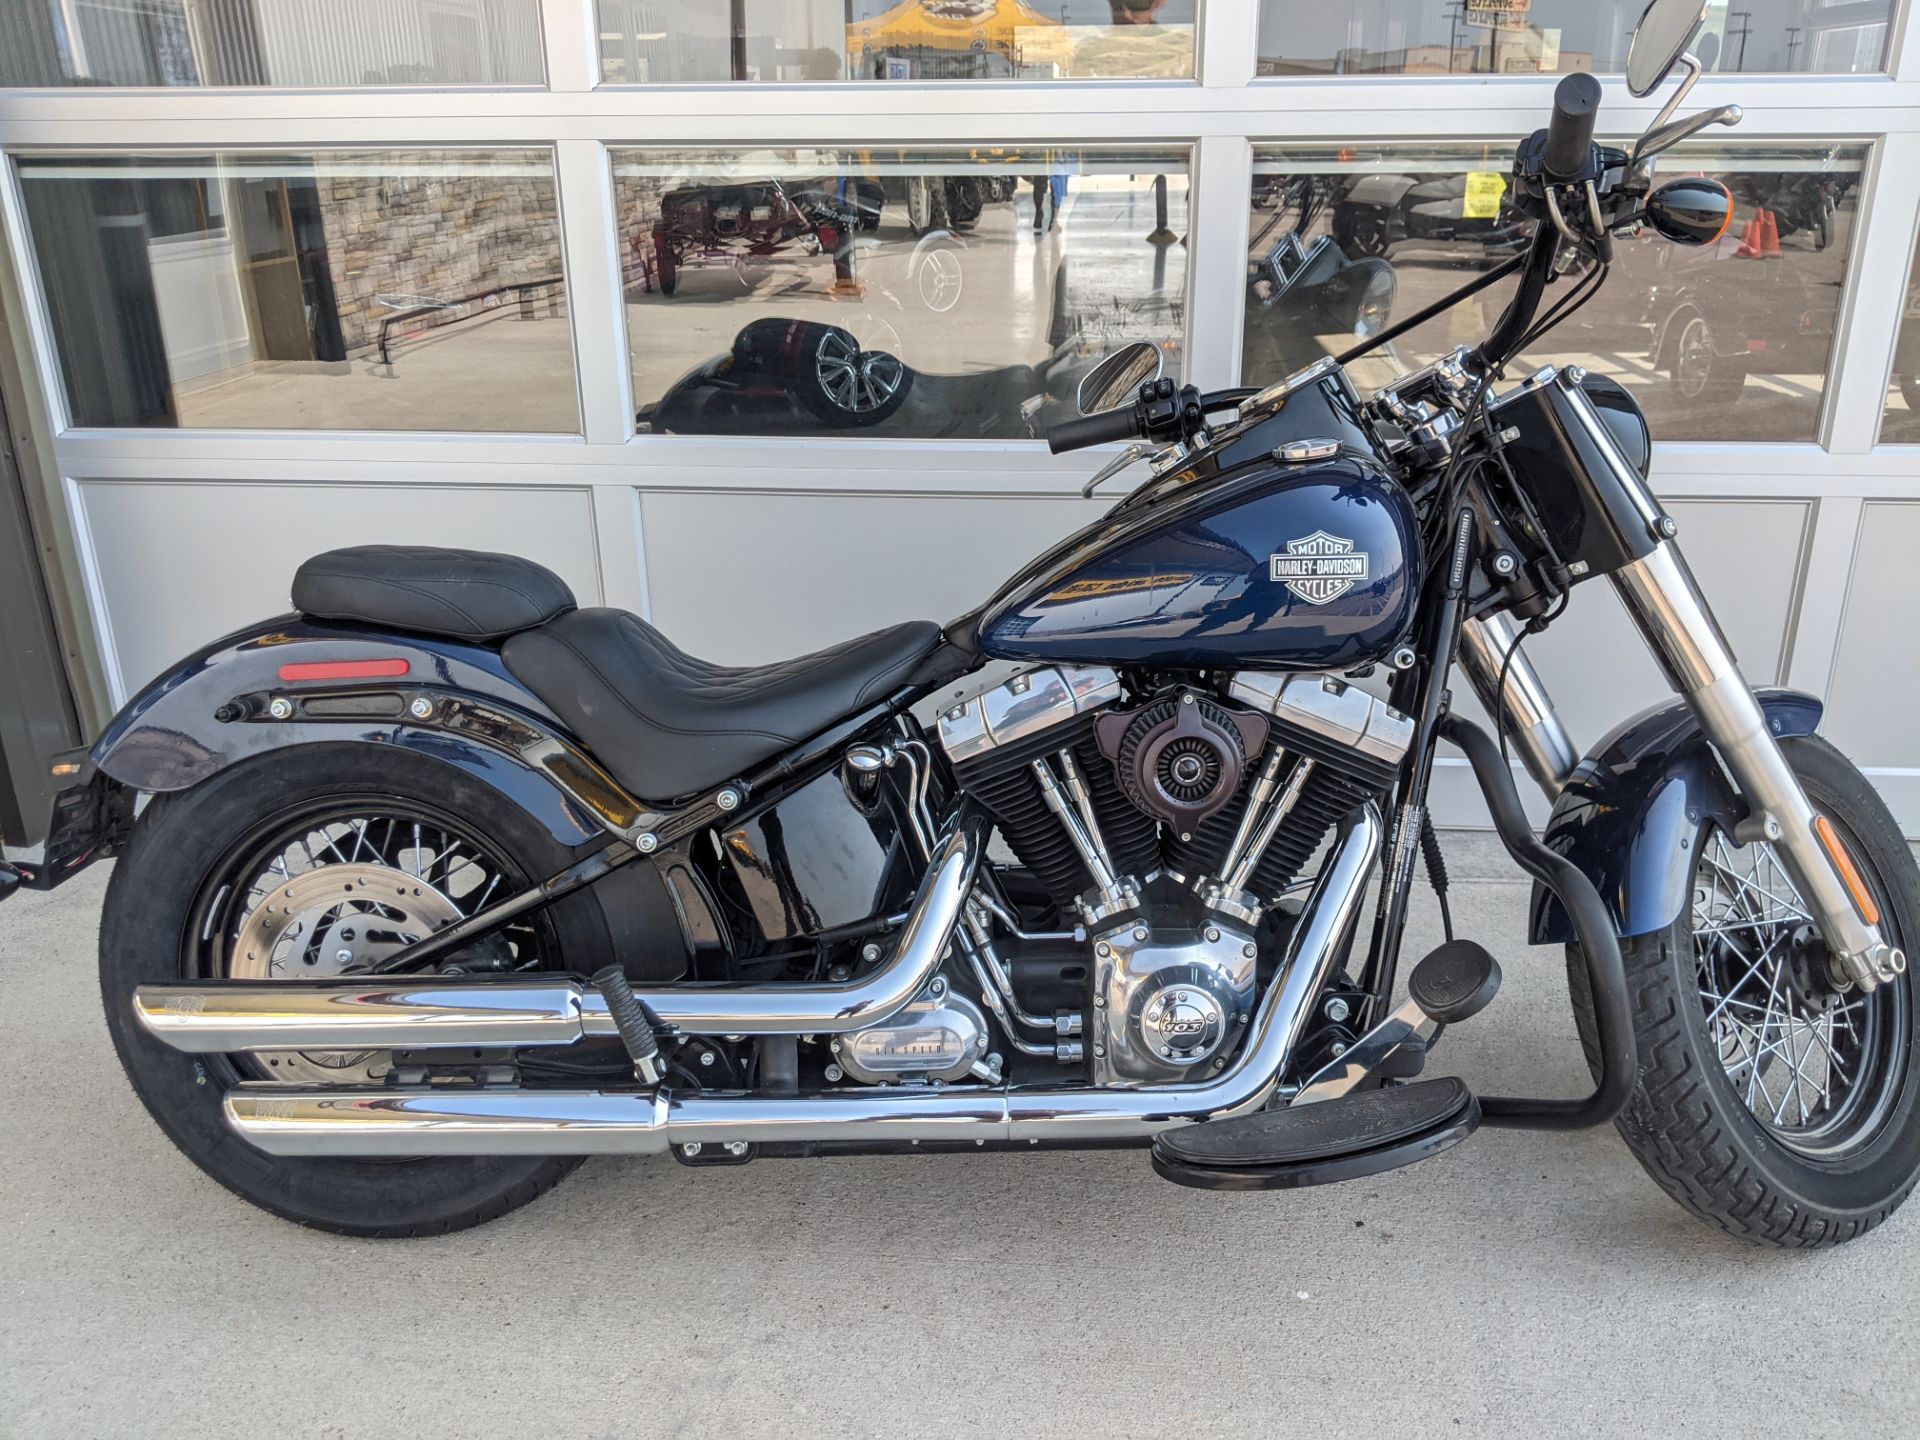 Used 2013 Harley Davidson Softail Slim Big Blue Pearl Motorcycles In Rapid City Sd U154